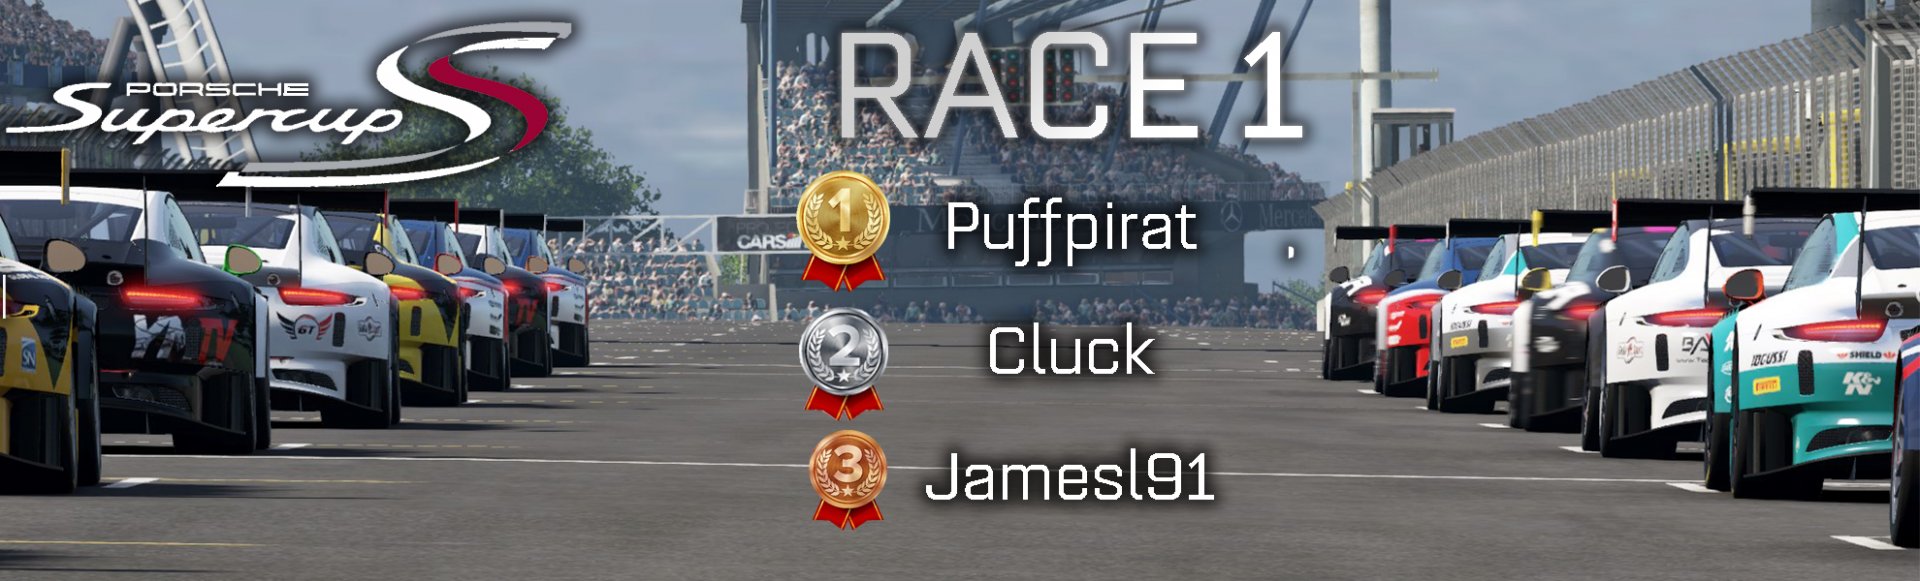 Result race 1.jpg